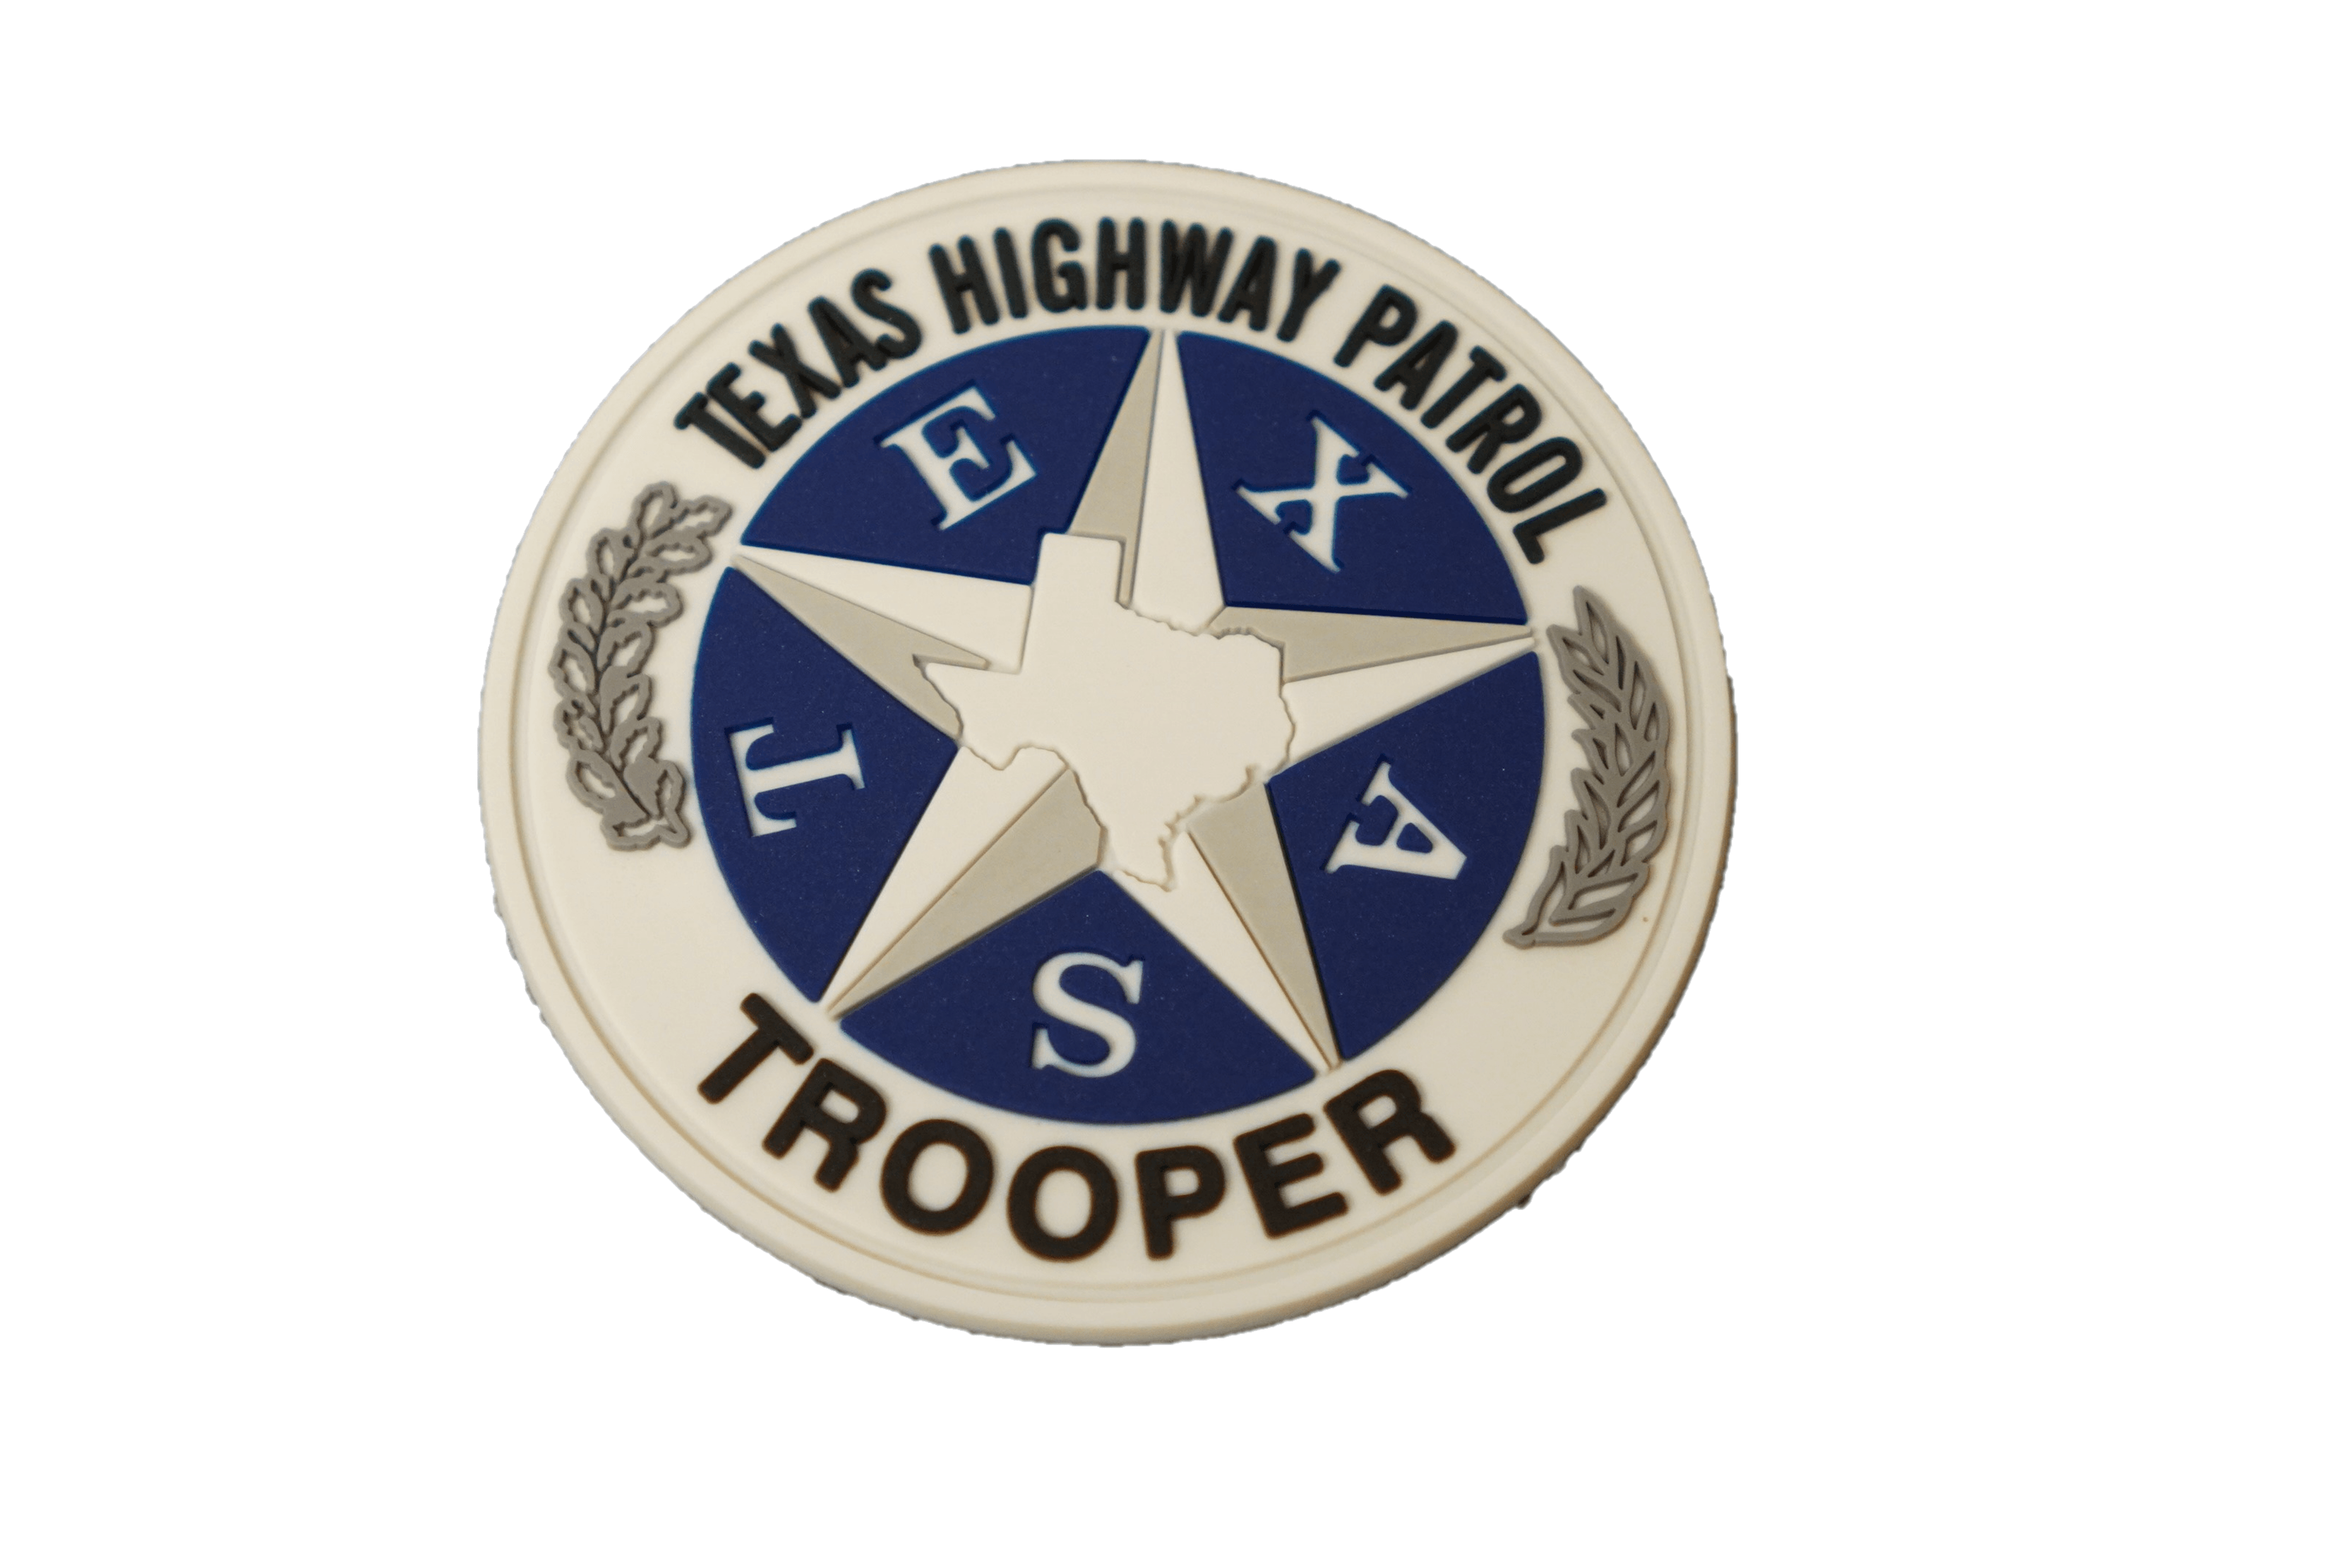 Texas Ranger Badge Sticker – Texas DPSOA Online Store